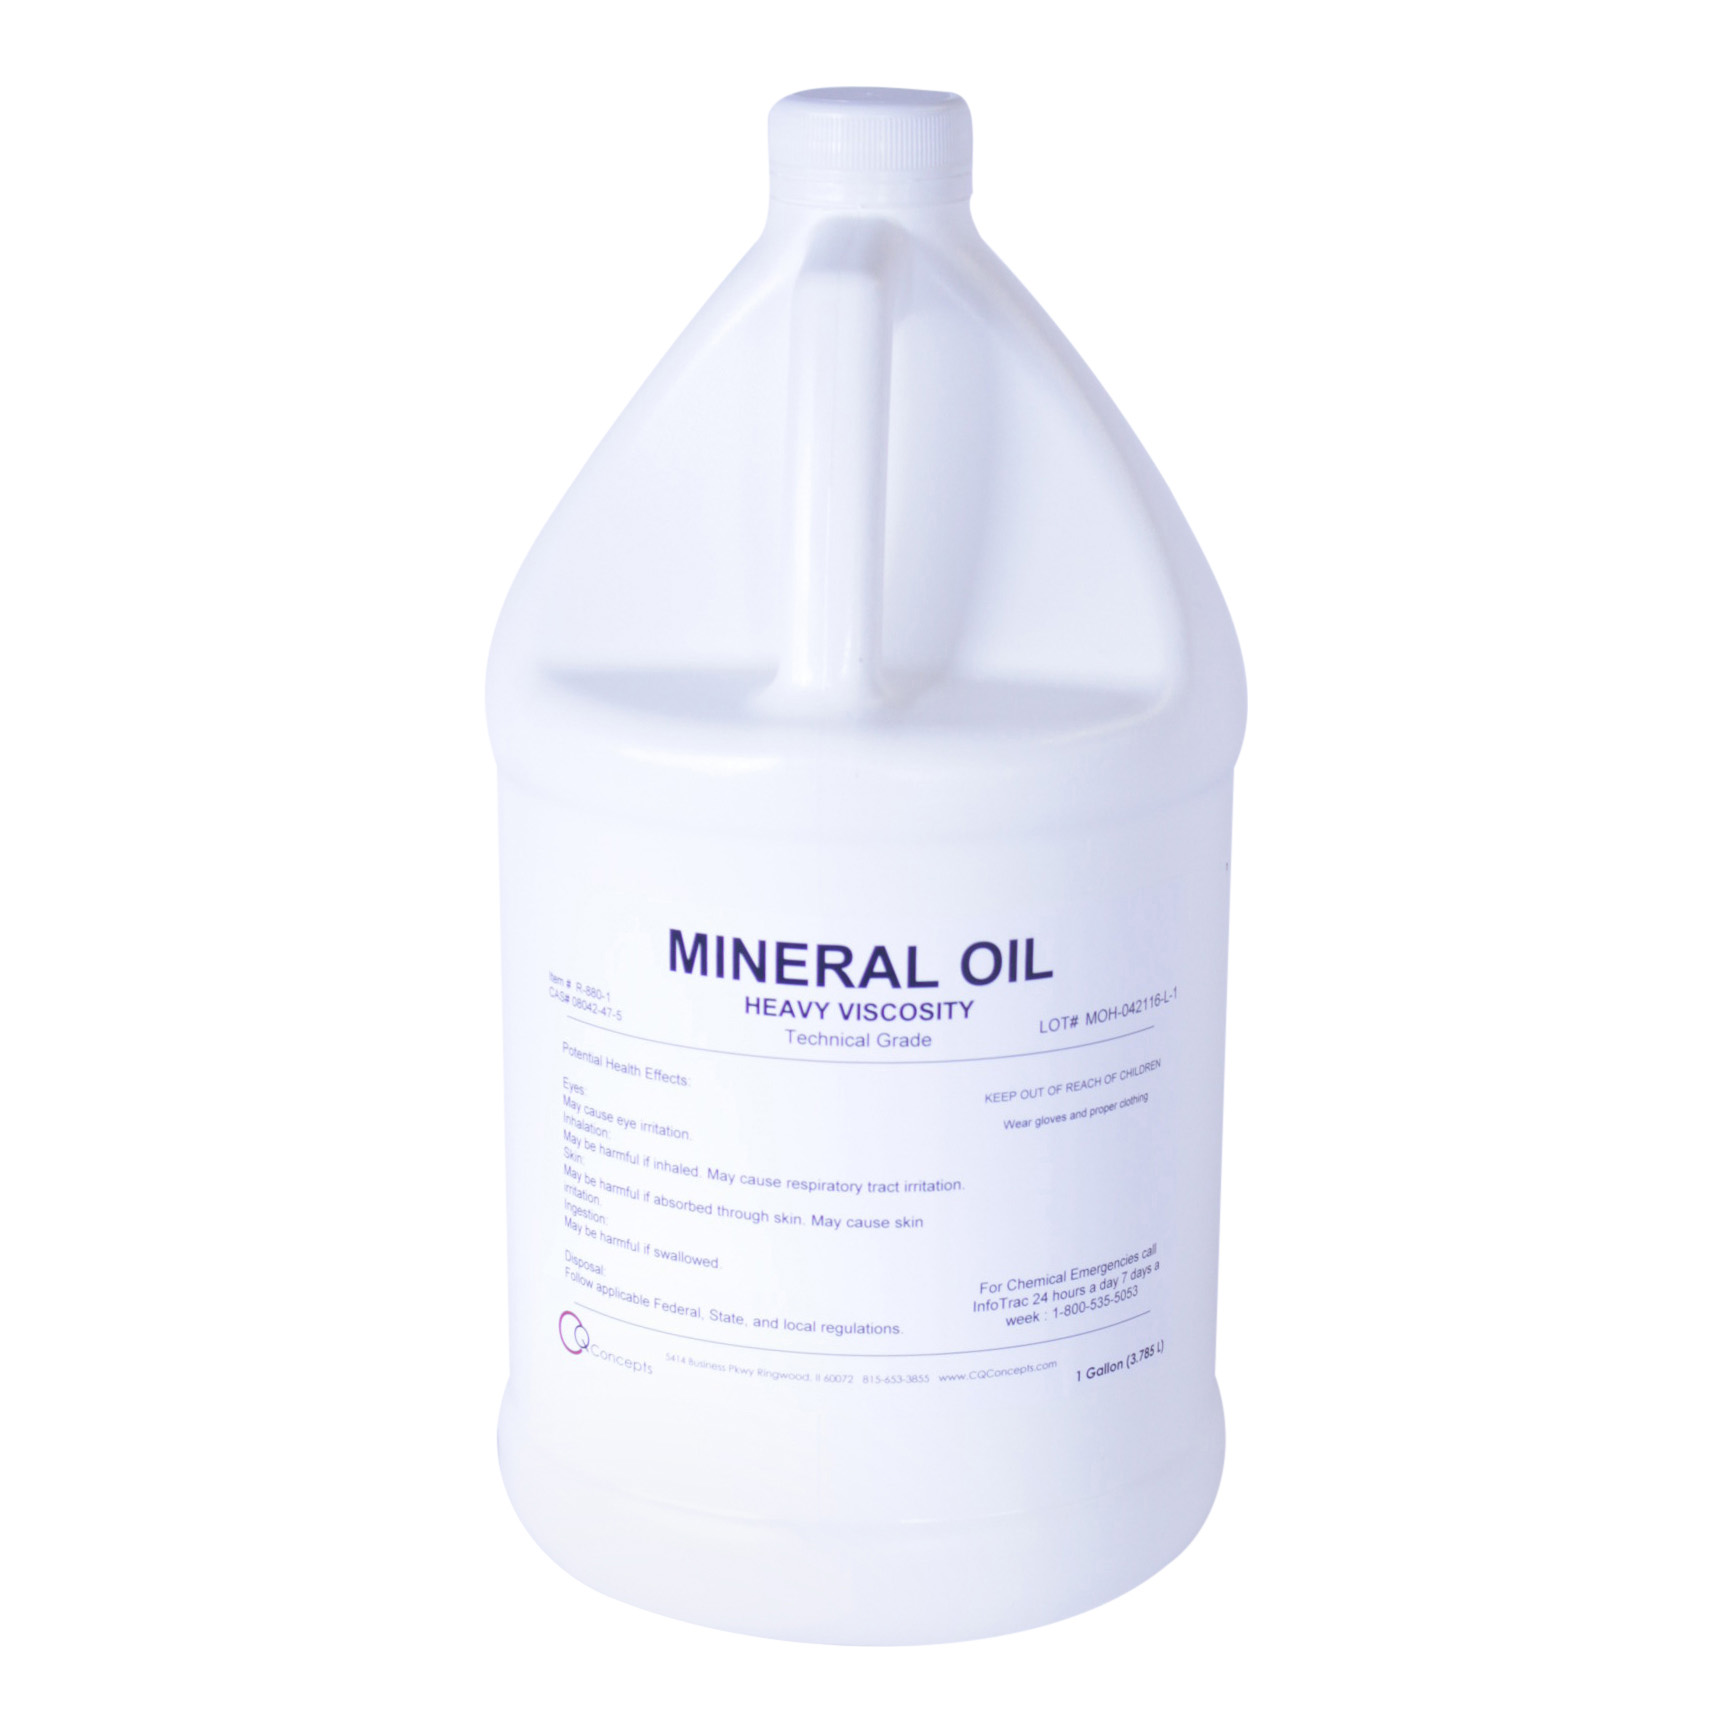 Mineral oil - Wikipedia